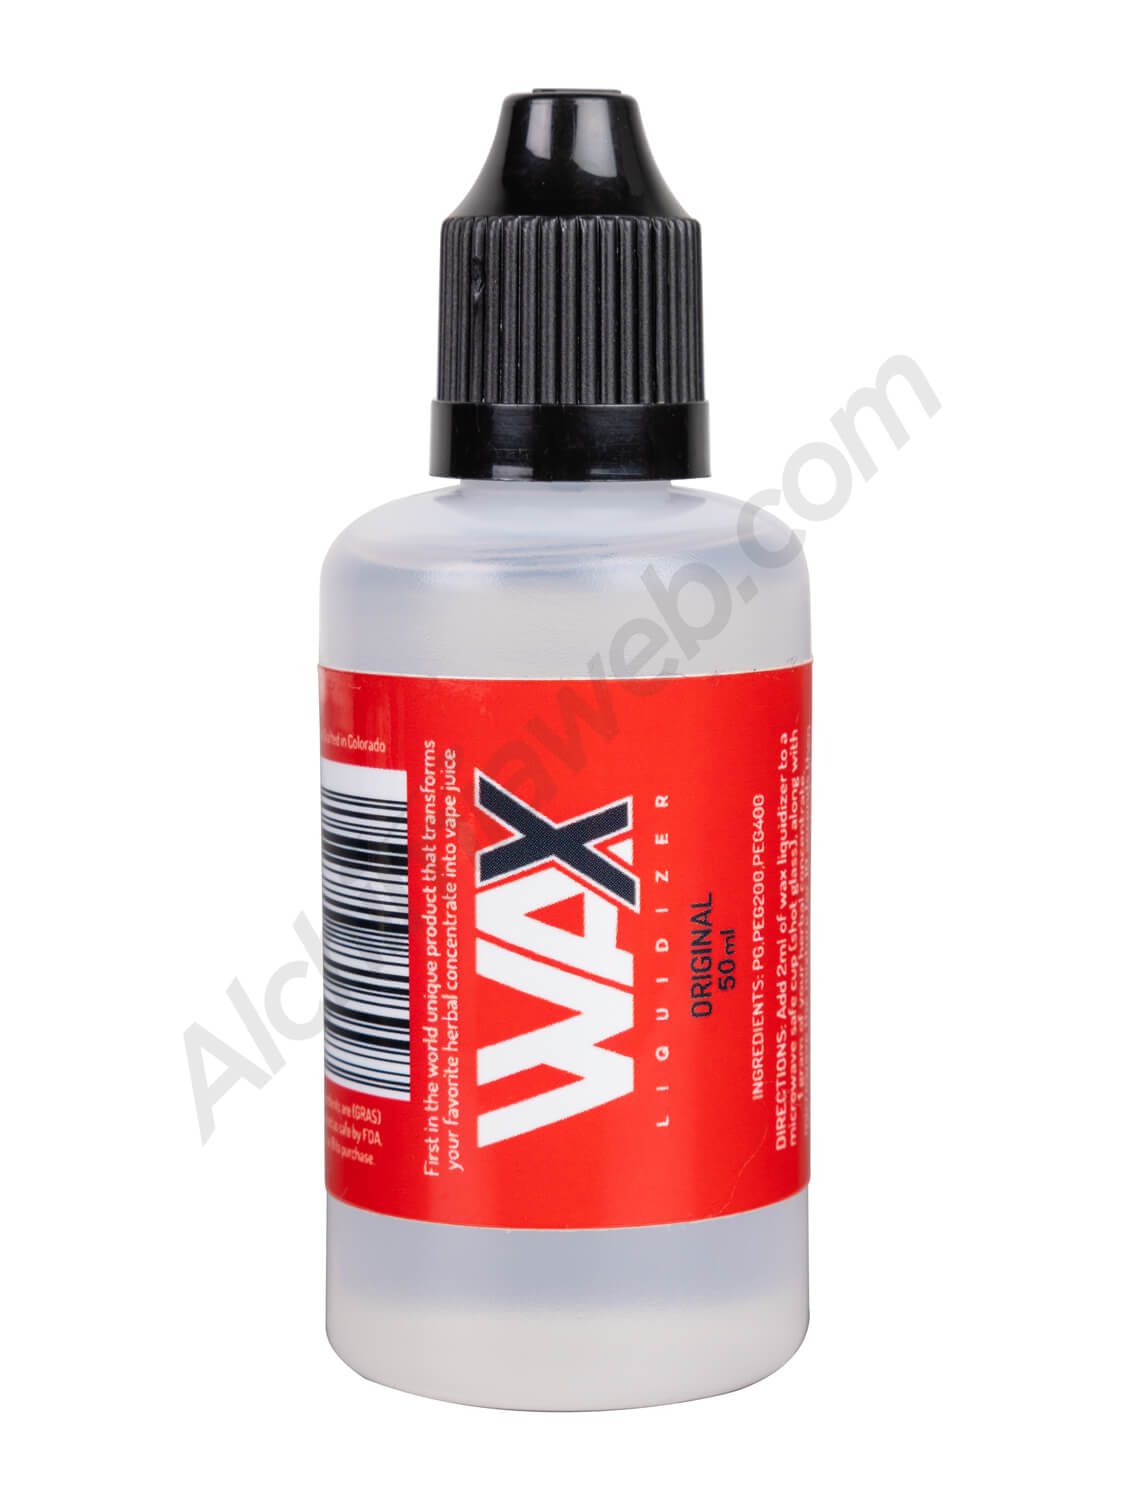 Sale of Wax Liquidizer Original